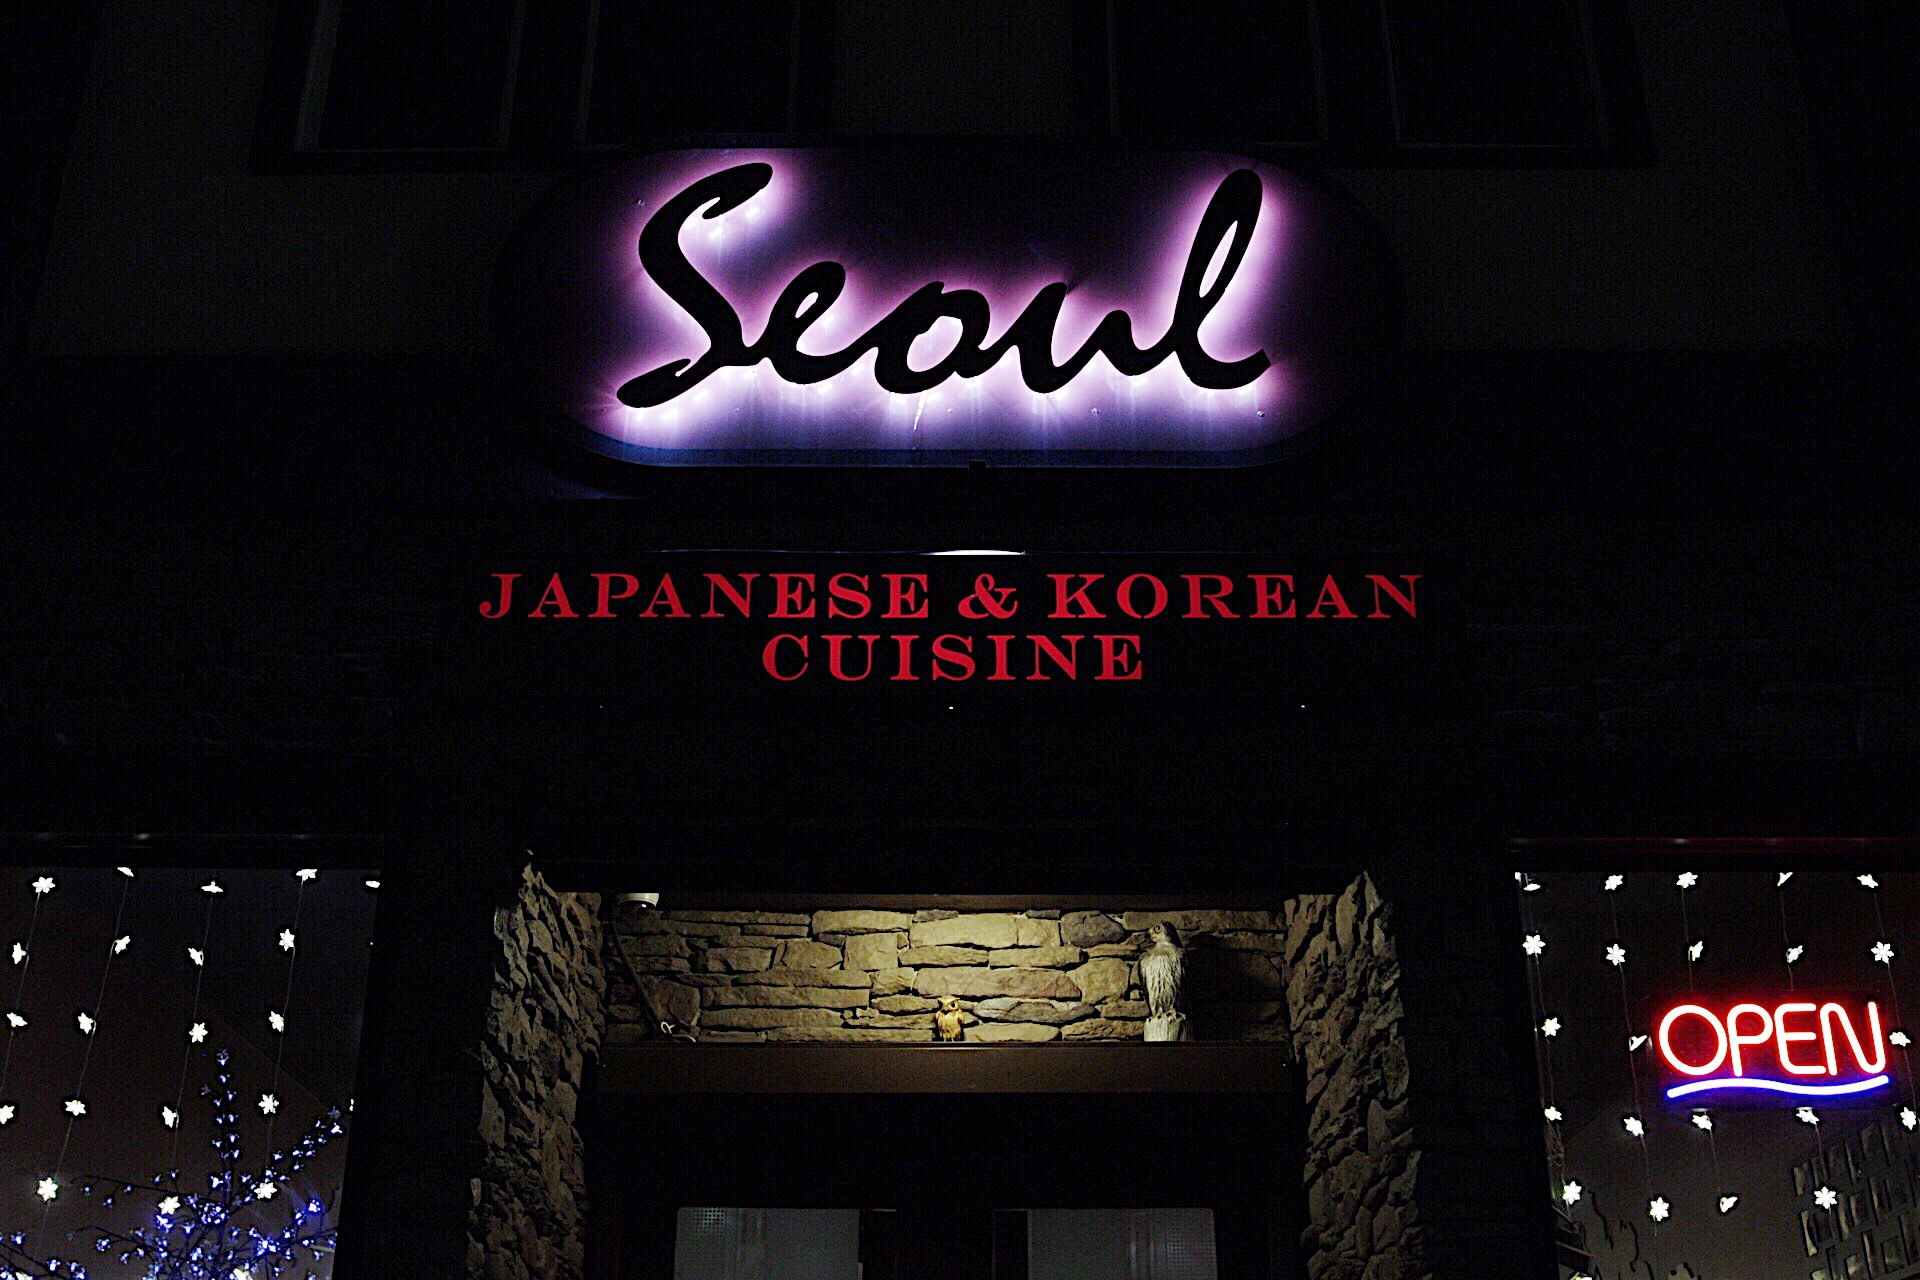 Seoul Japanese and Korean Cuisine